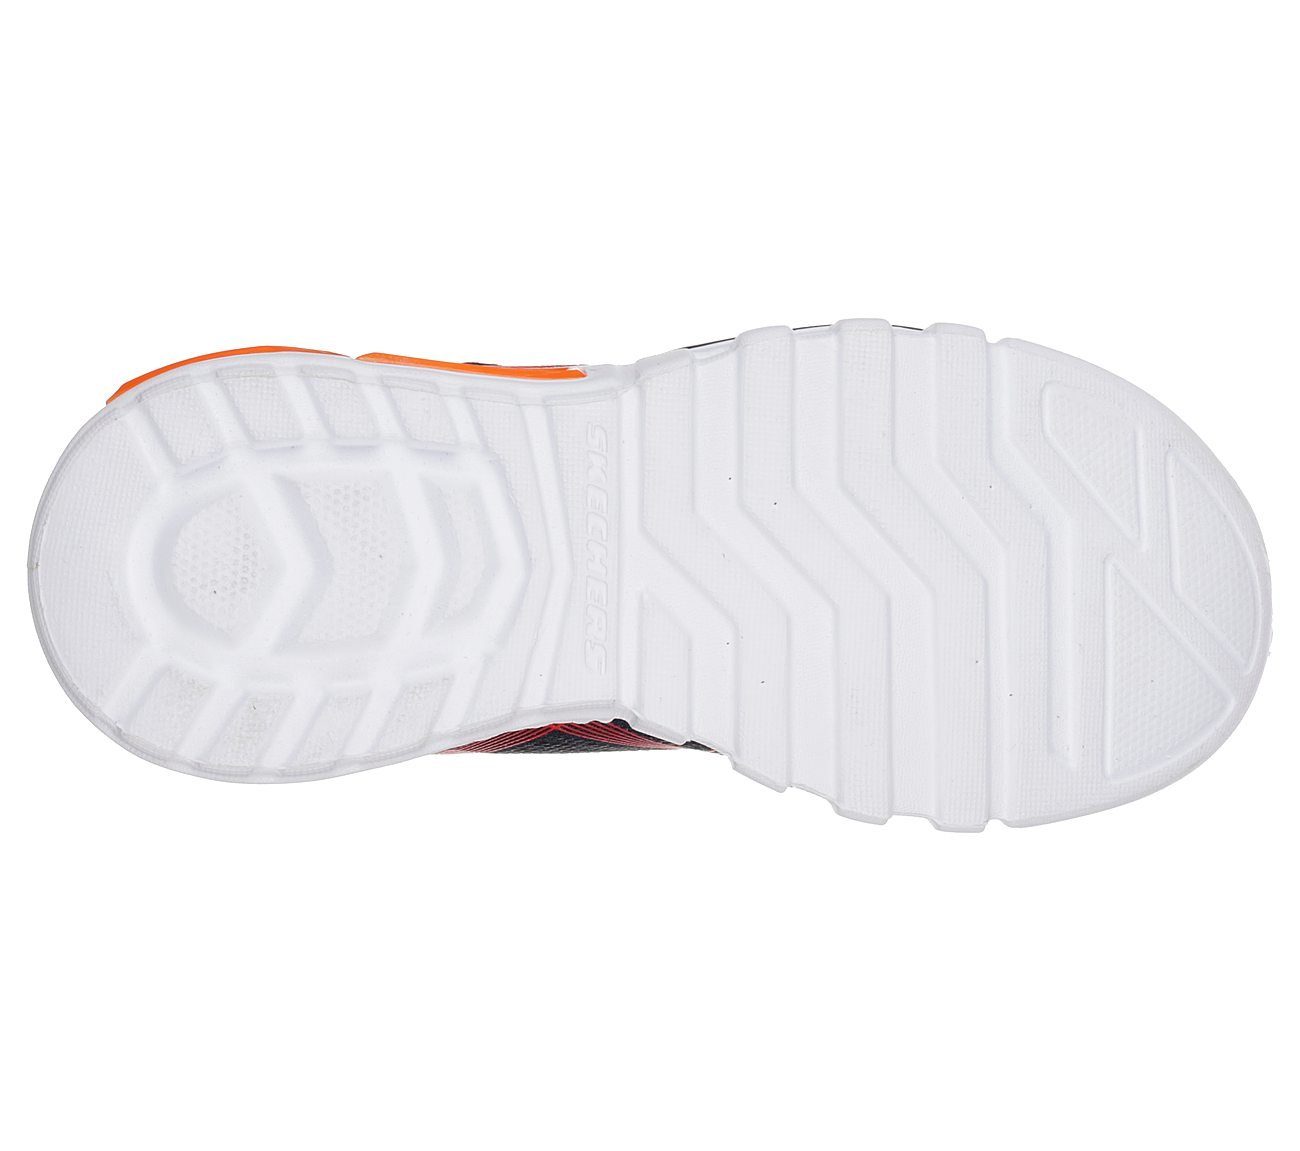 Skechers / dunkelblau orange Sneaker